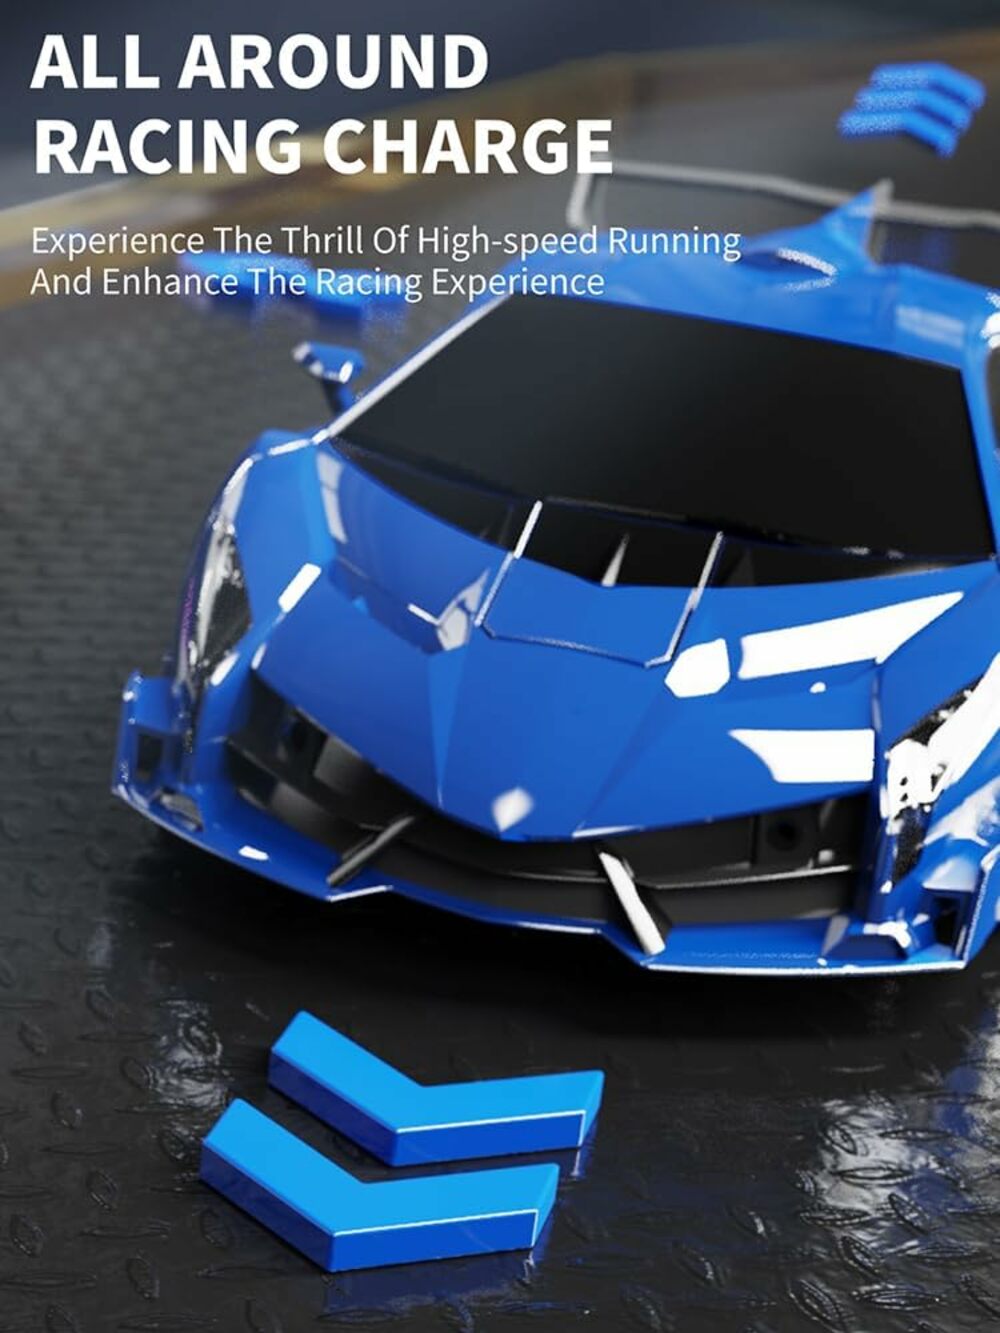 GOMINIMO Transform Car Robot Sport Car with Remote Control (Blue)